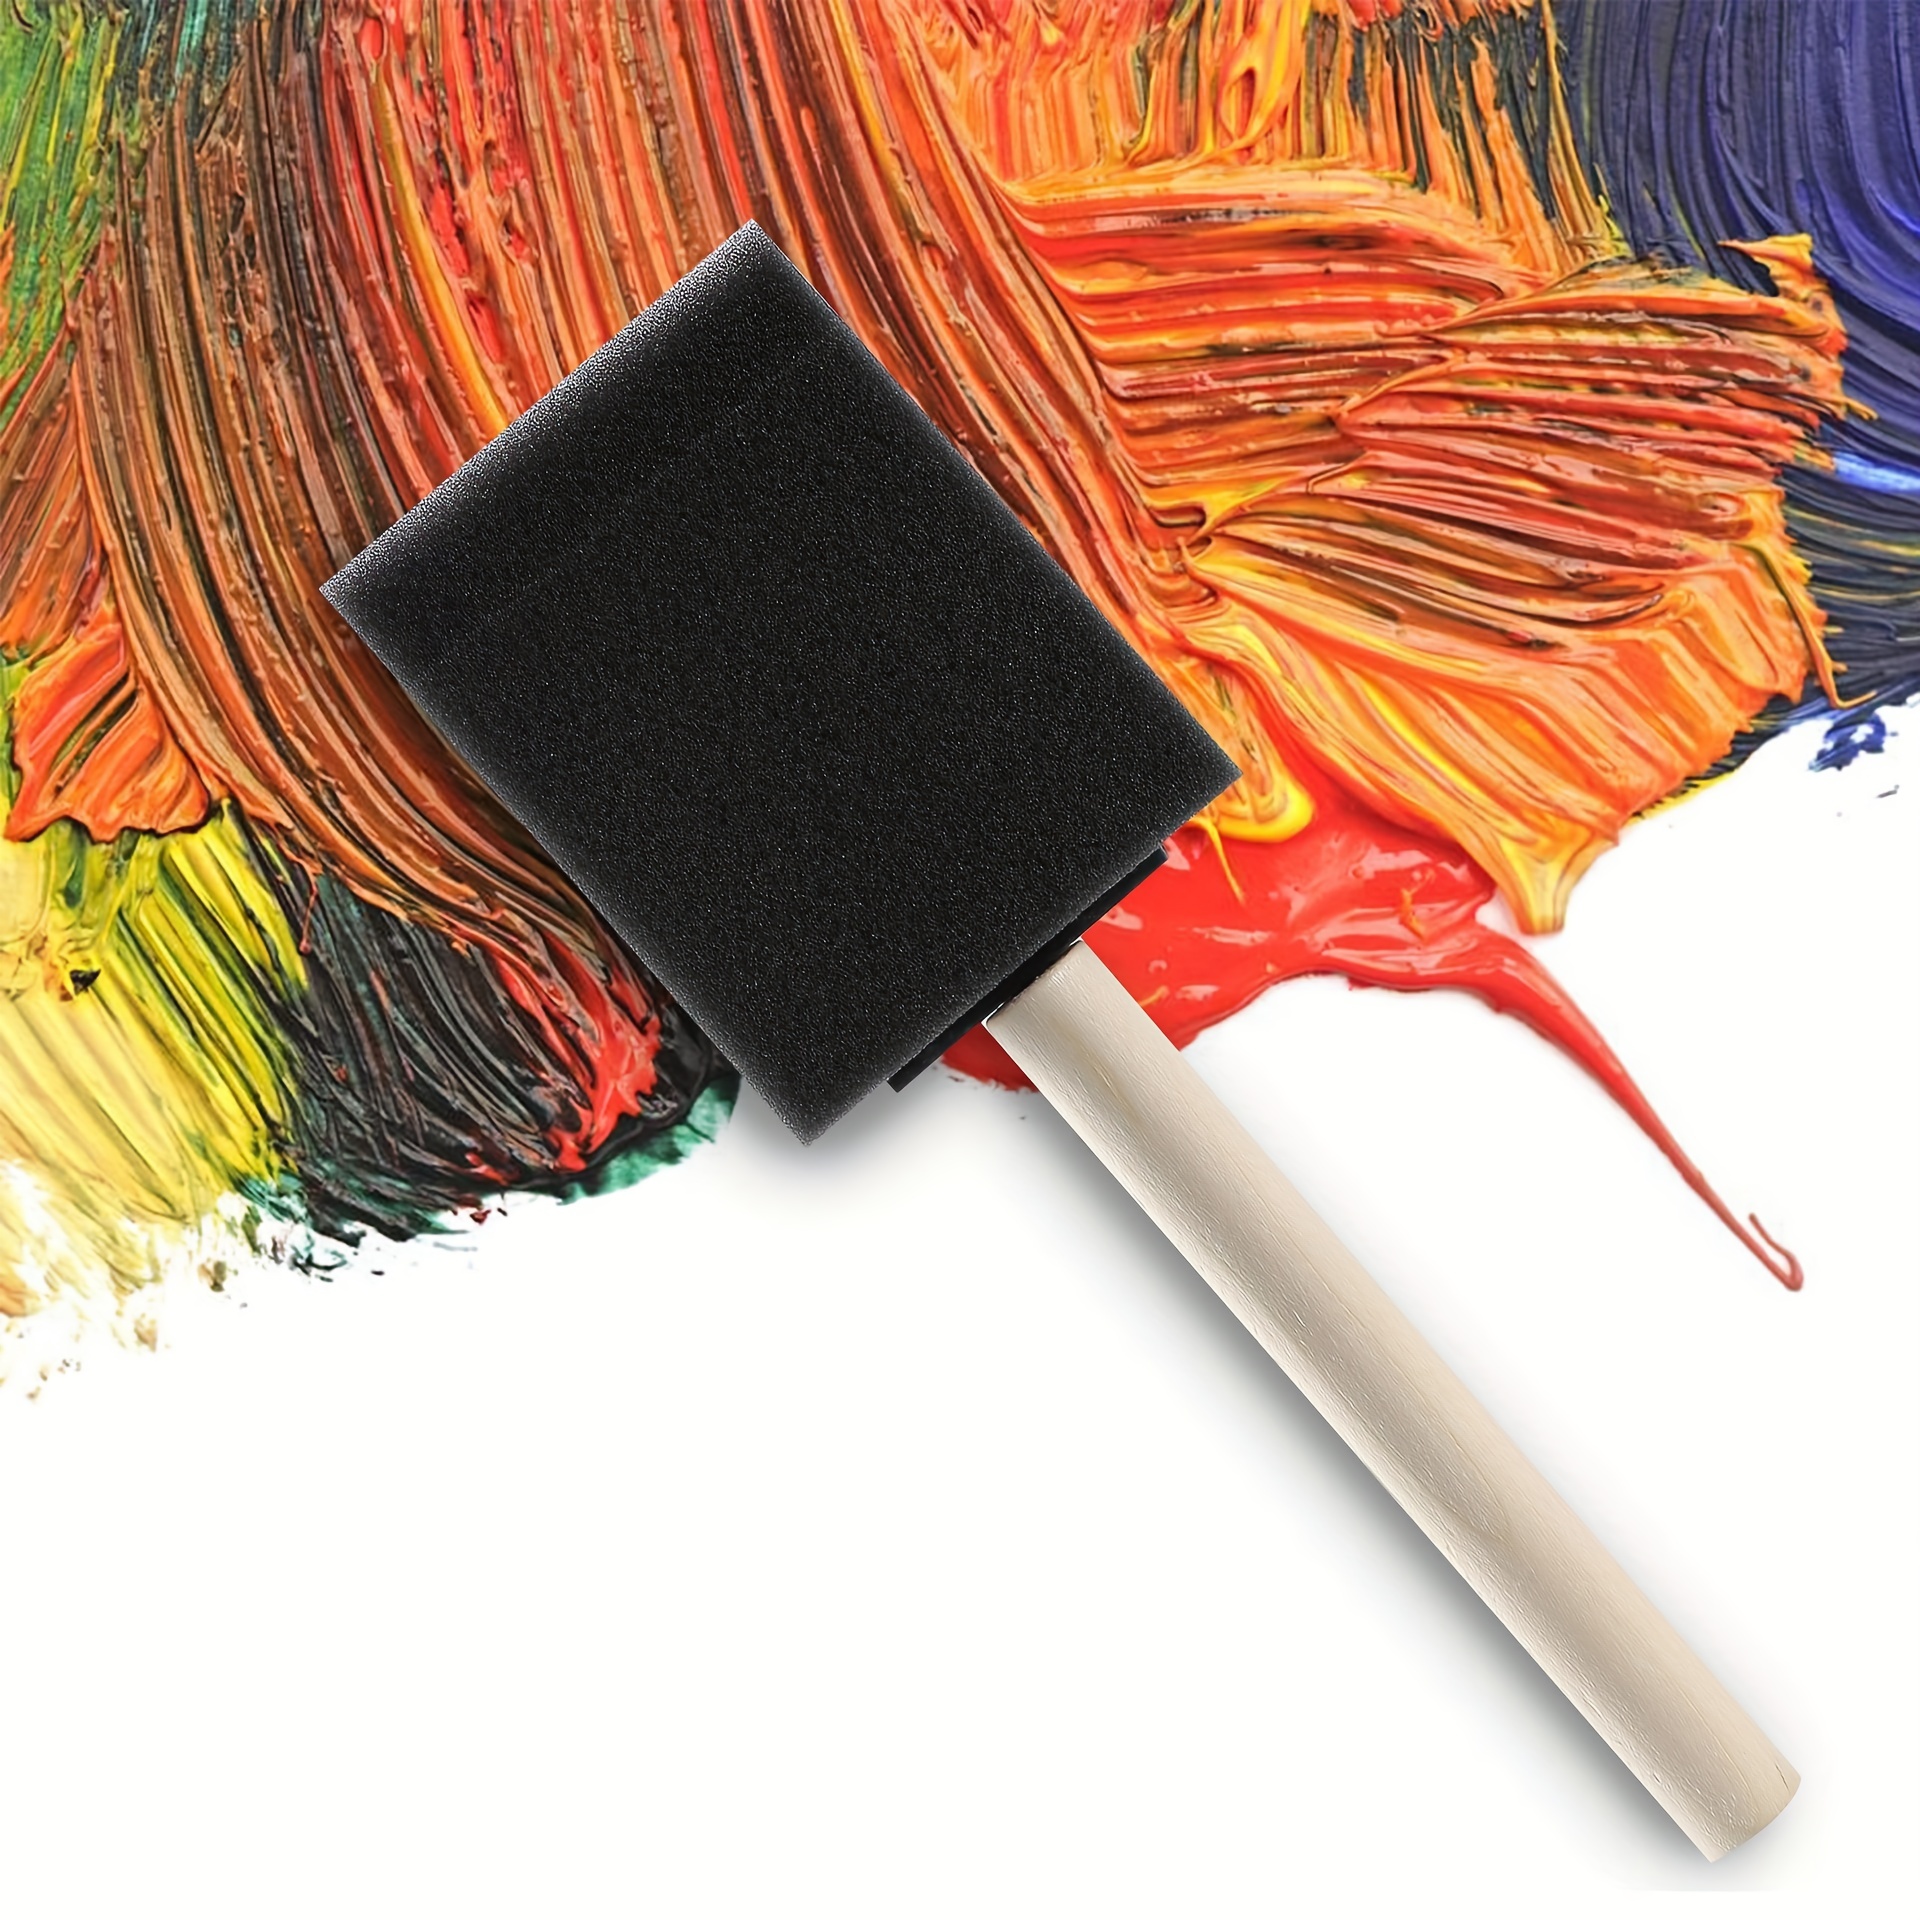 DIY Foam paint brushes